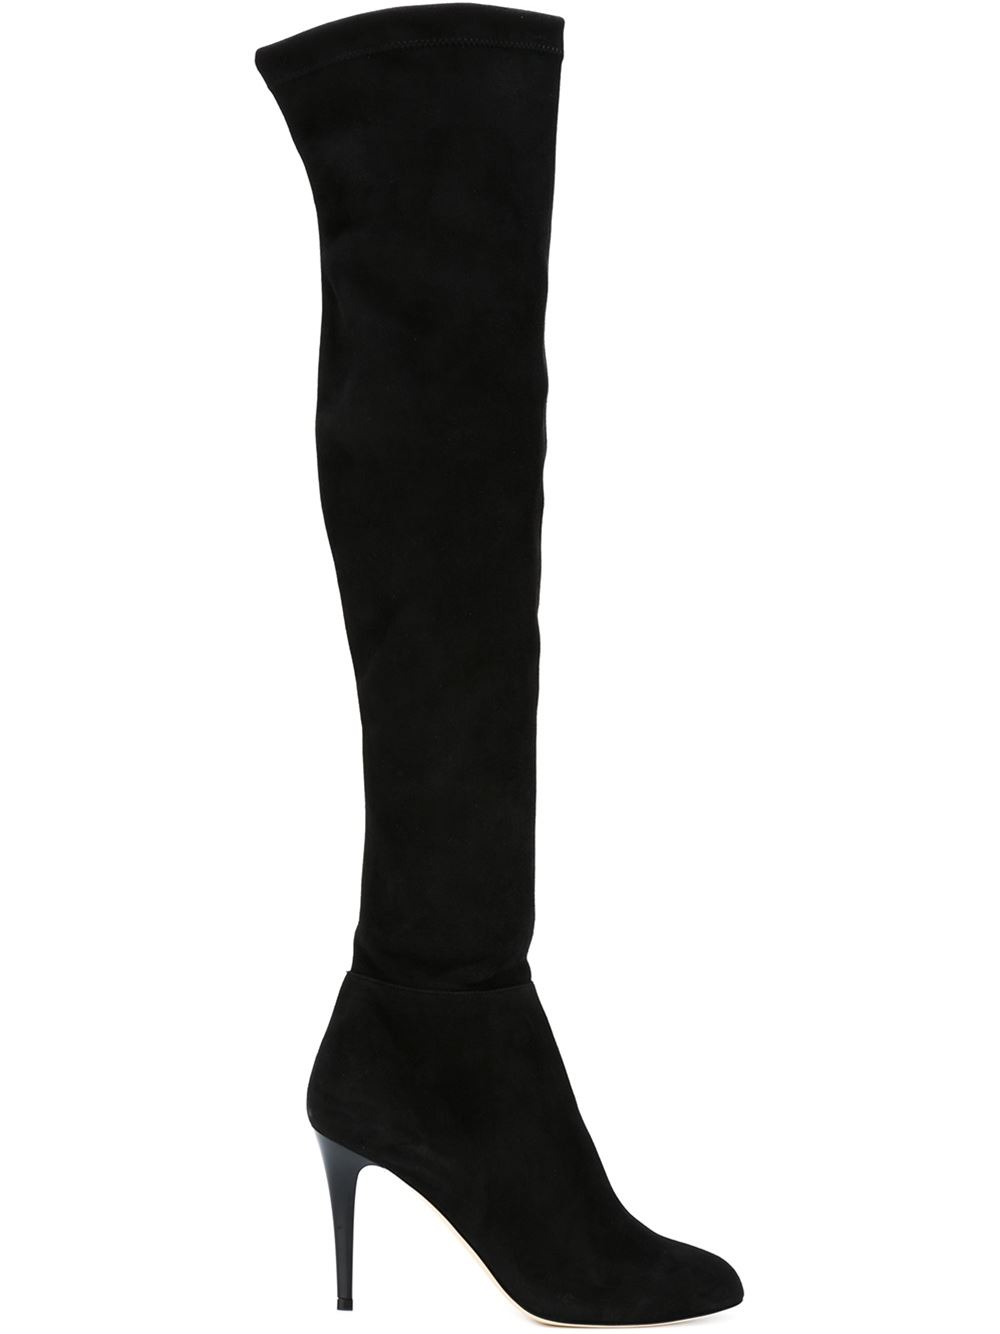 Jimmy choo 'Toni' Thigh High Boots in Black | Lyst